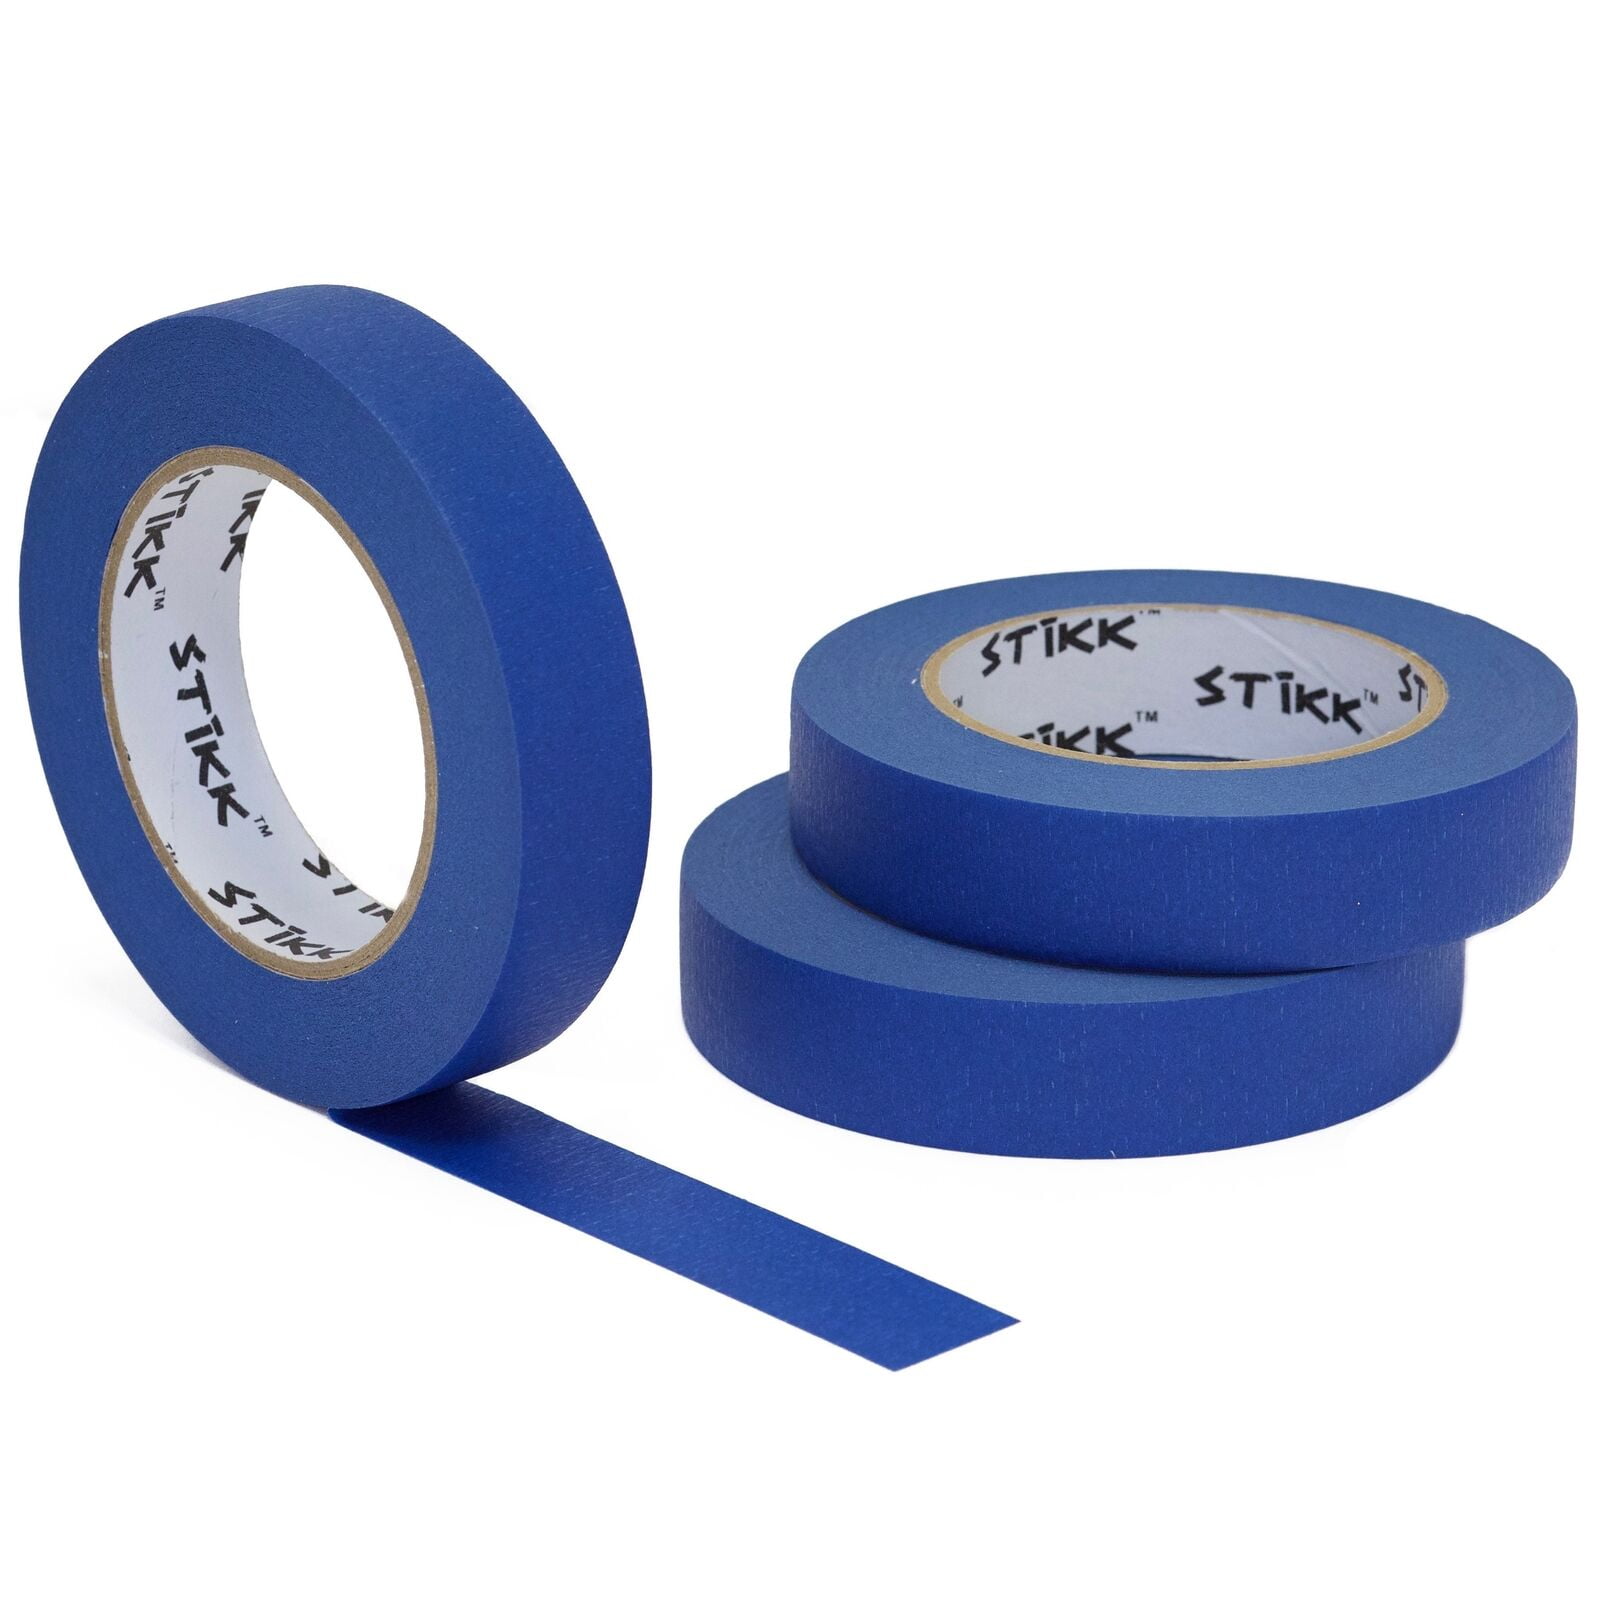 3 pack 1" inch x 60 yard rolls STIKK Sky Blue Painters Masking Tape 24mm x 55m 